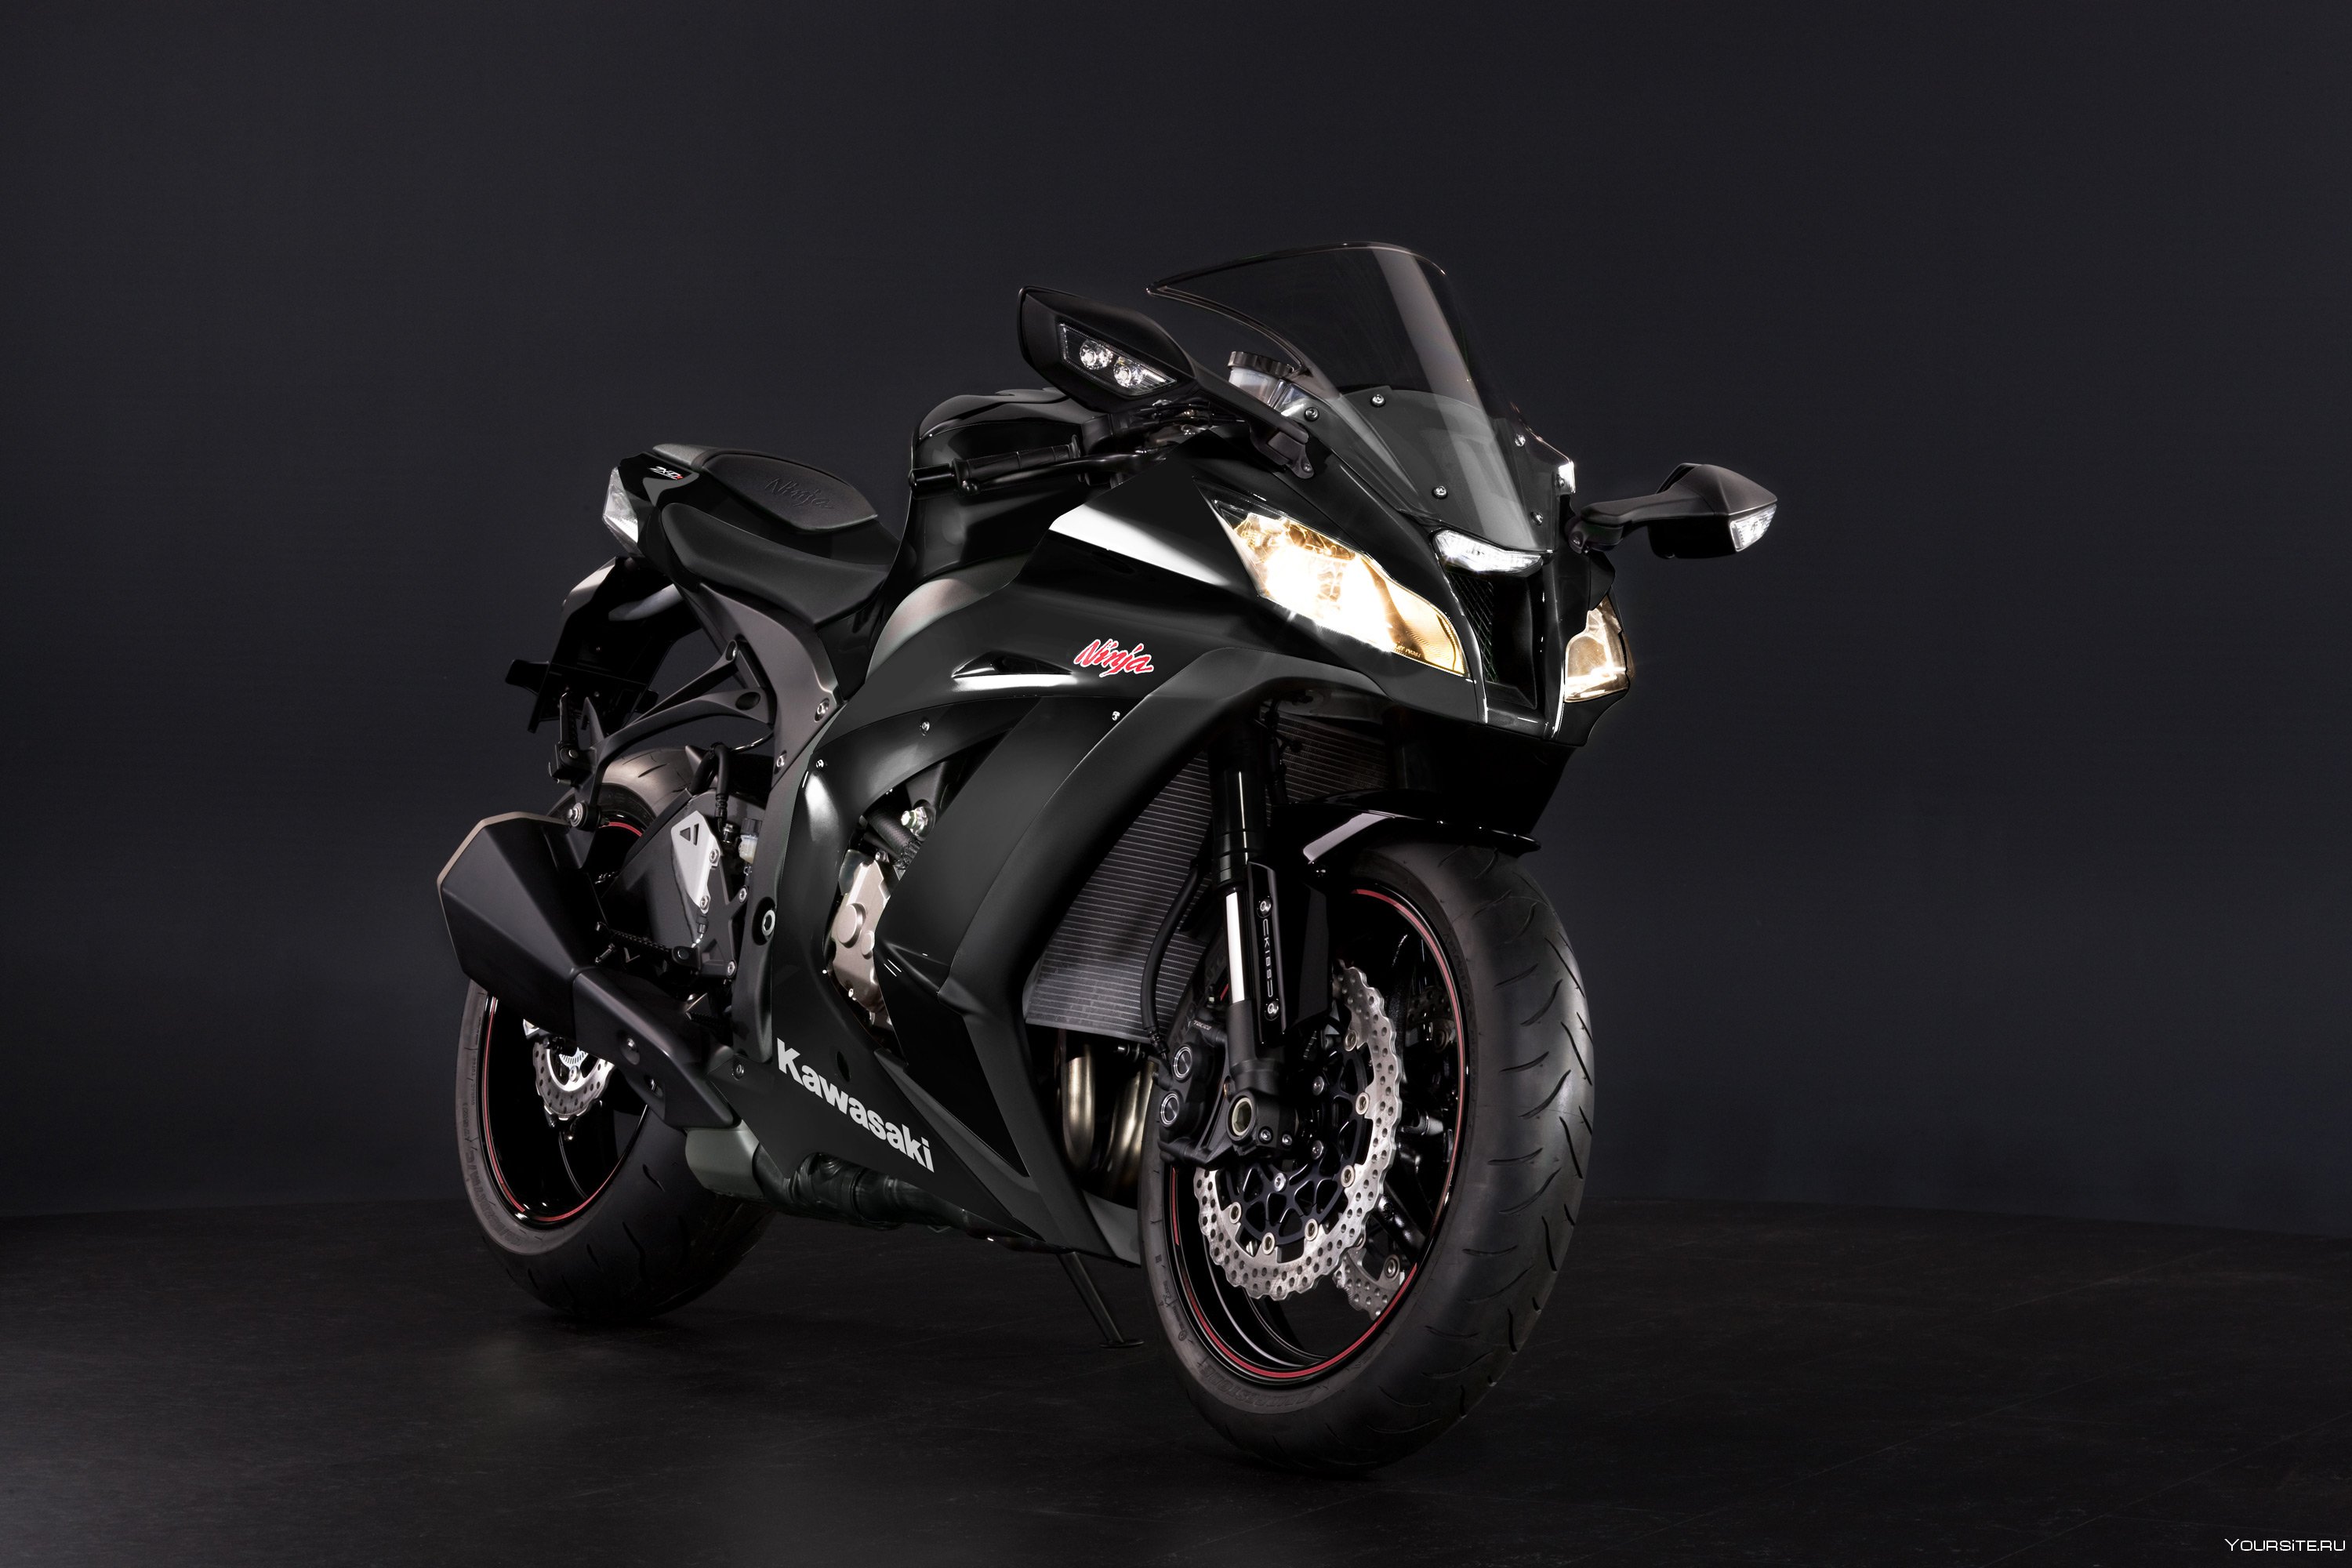 Обои на стол мотоциклы. Мотоцикл Кавасаки черный. Мотоцикл Кавасаки ниндзя черный. Kawasaki Ninja 300 Black. ZX-10r Ninja 2011.